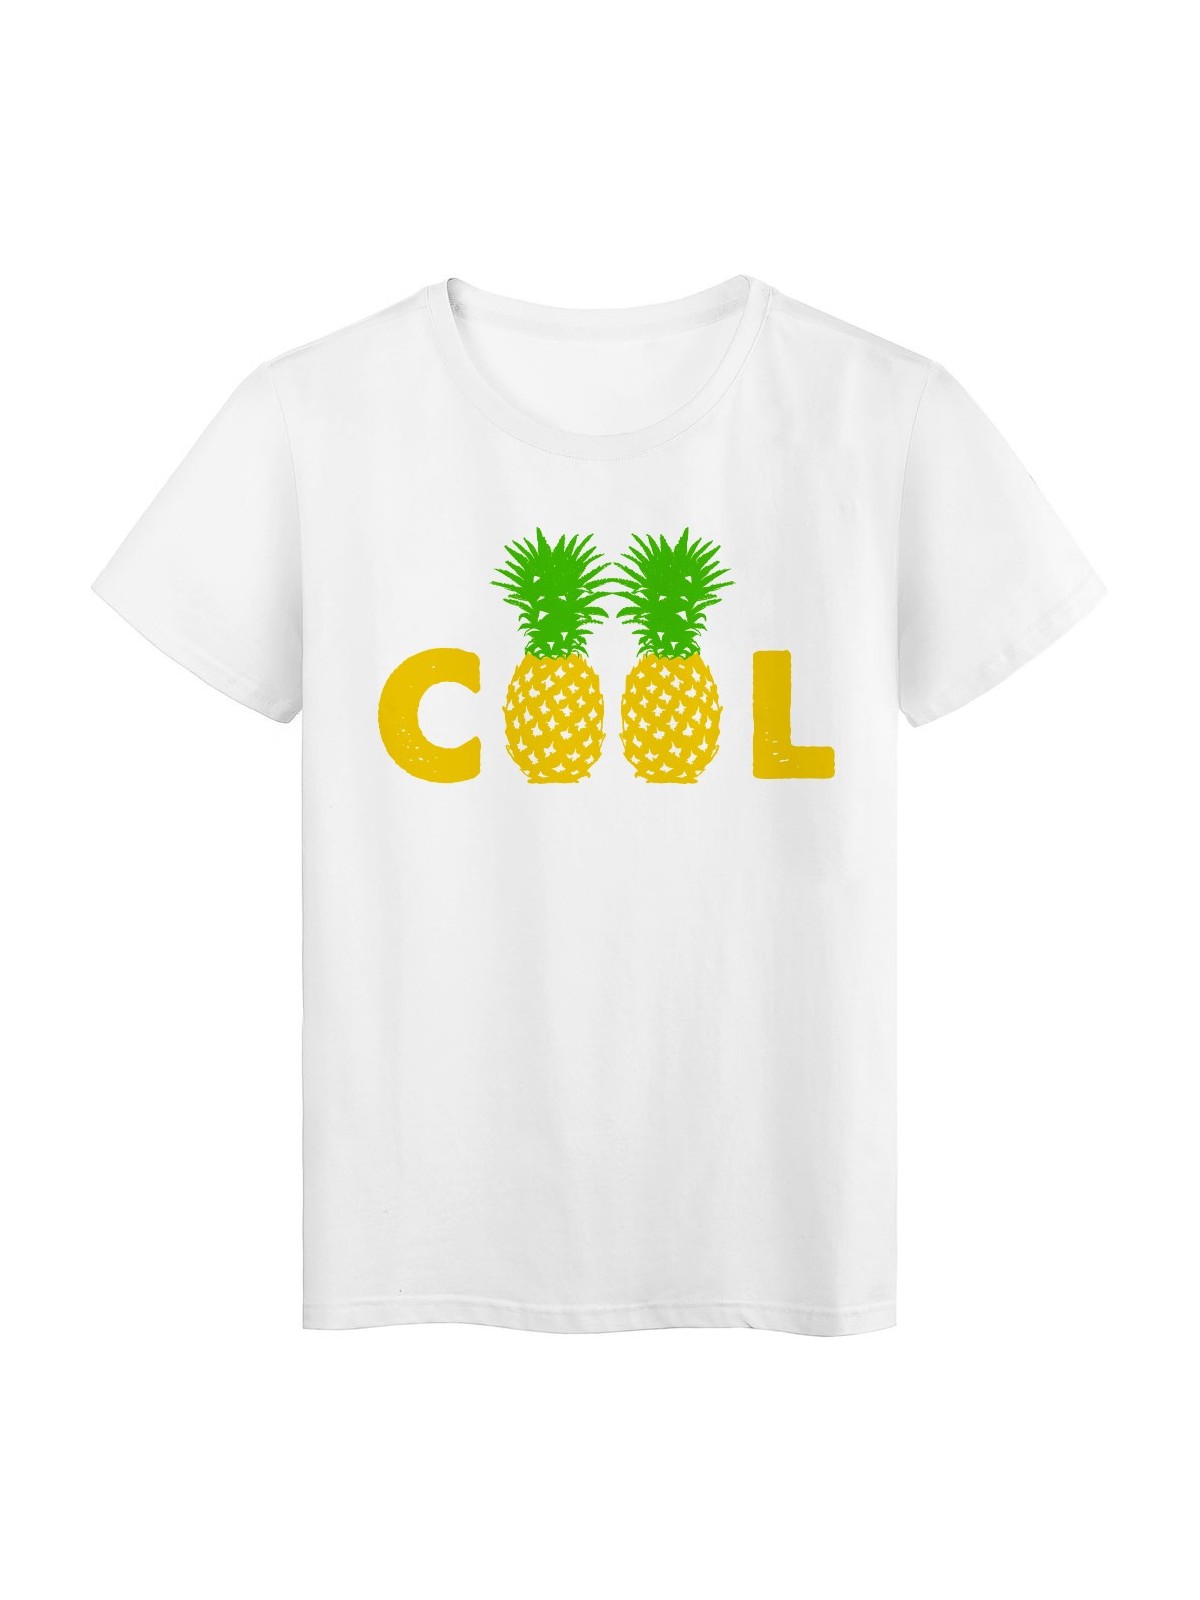 T-Shirt blanc design Ananas cool humour rÃ©f Tee shirt 2160